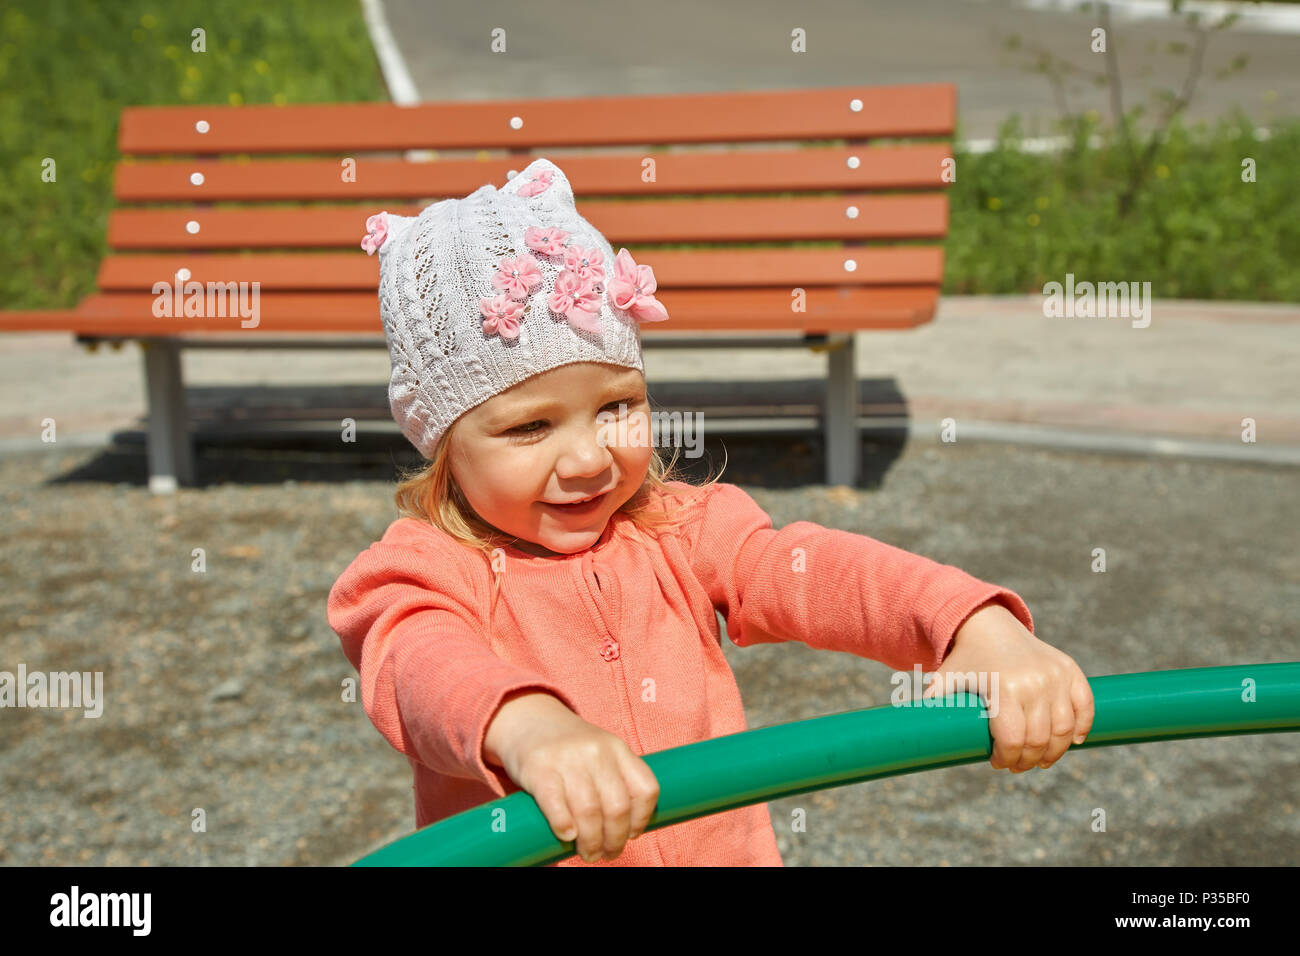 little girl on playground Stock Photo - Alamy